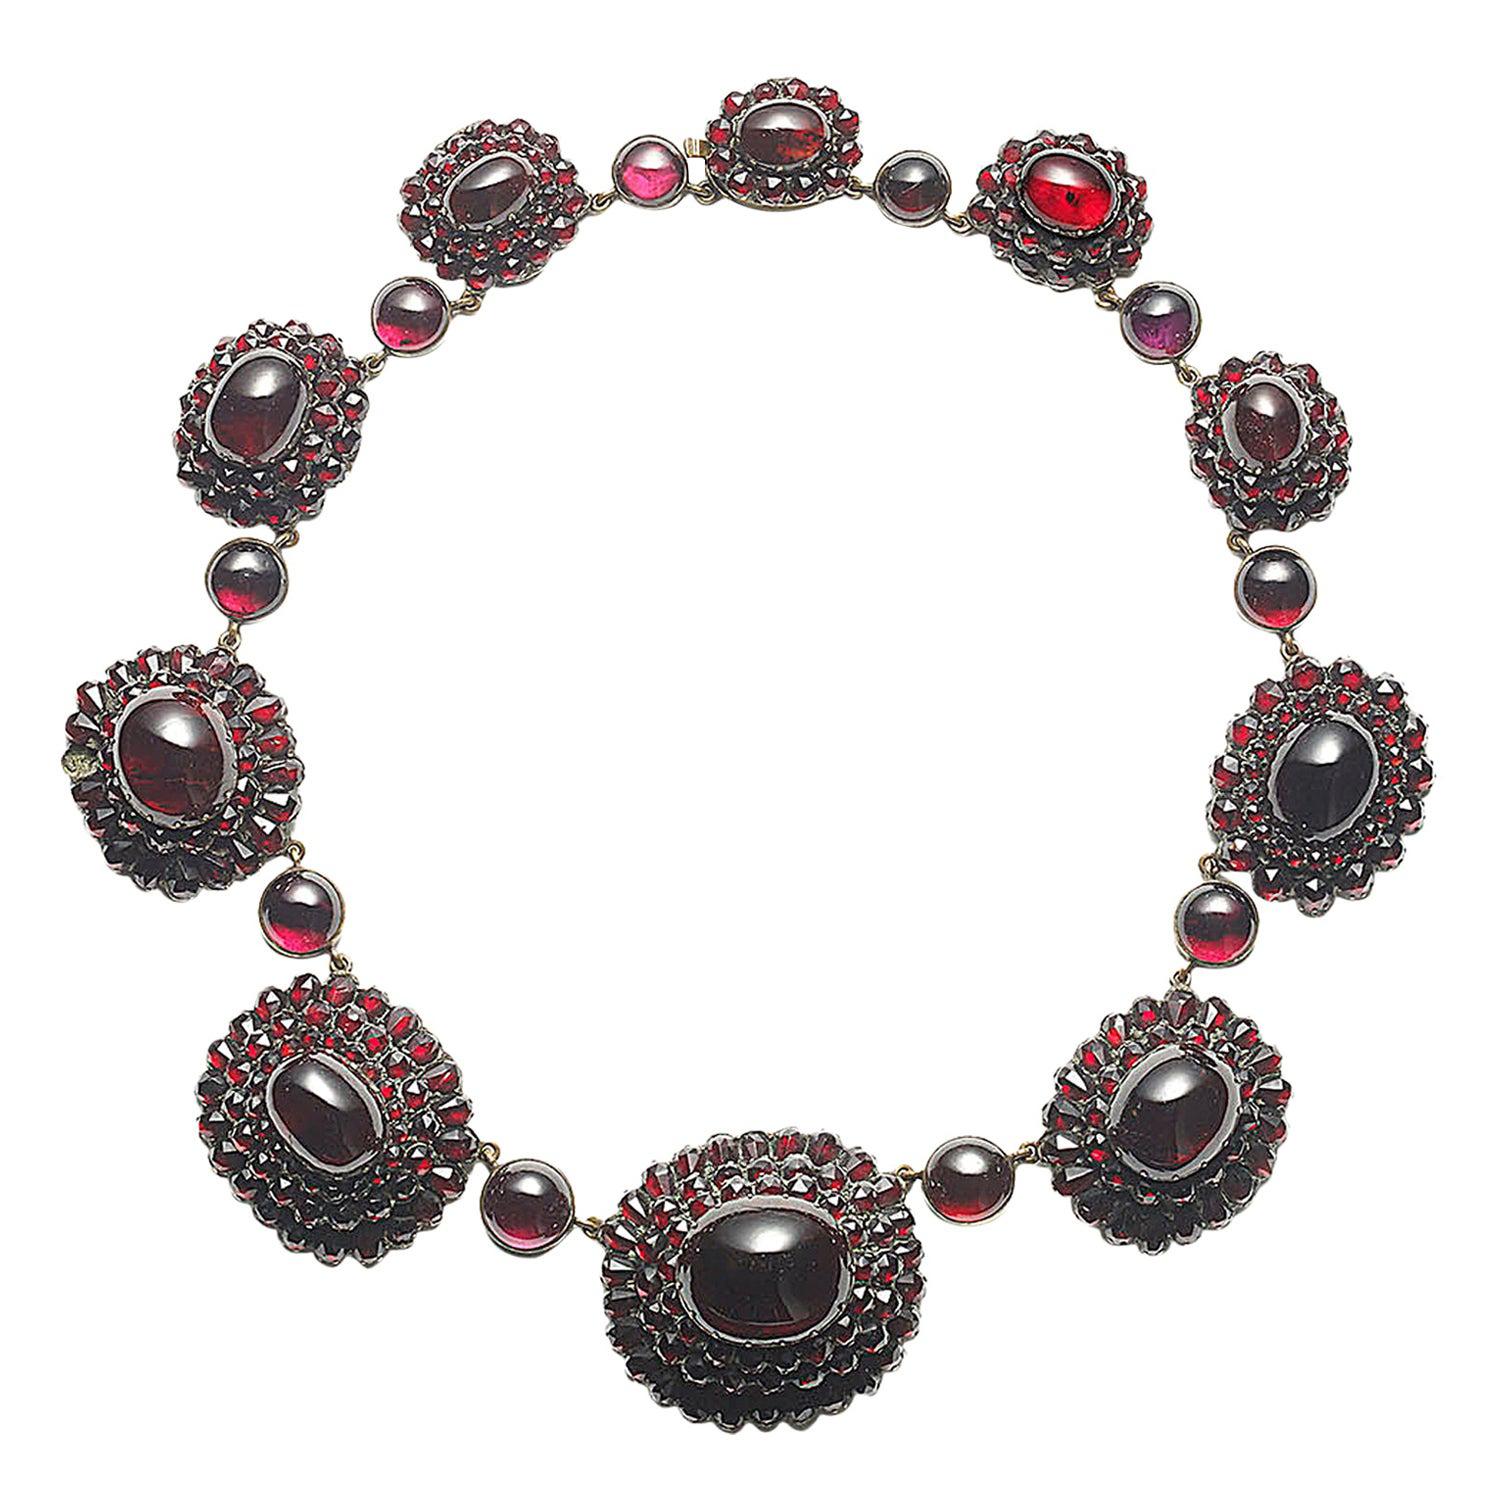 Antique Garnet Necklace